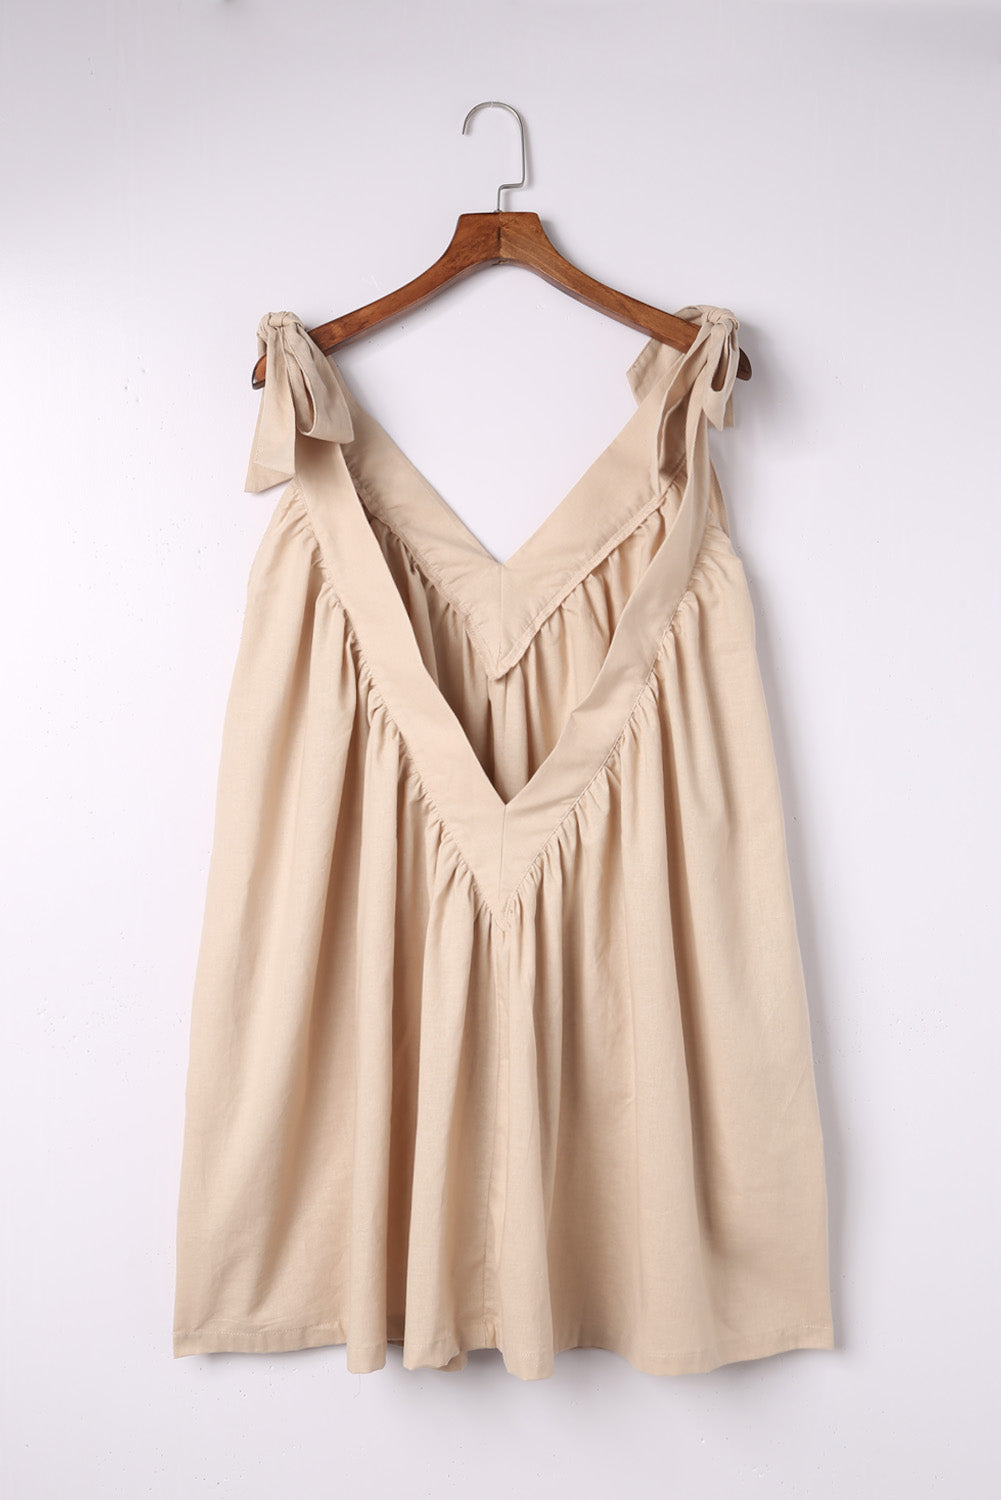 NTG Fad DRESS Apricot Deep V Neck Bow Oversized Backless Mini Dress-(Hand Made)